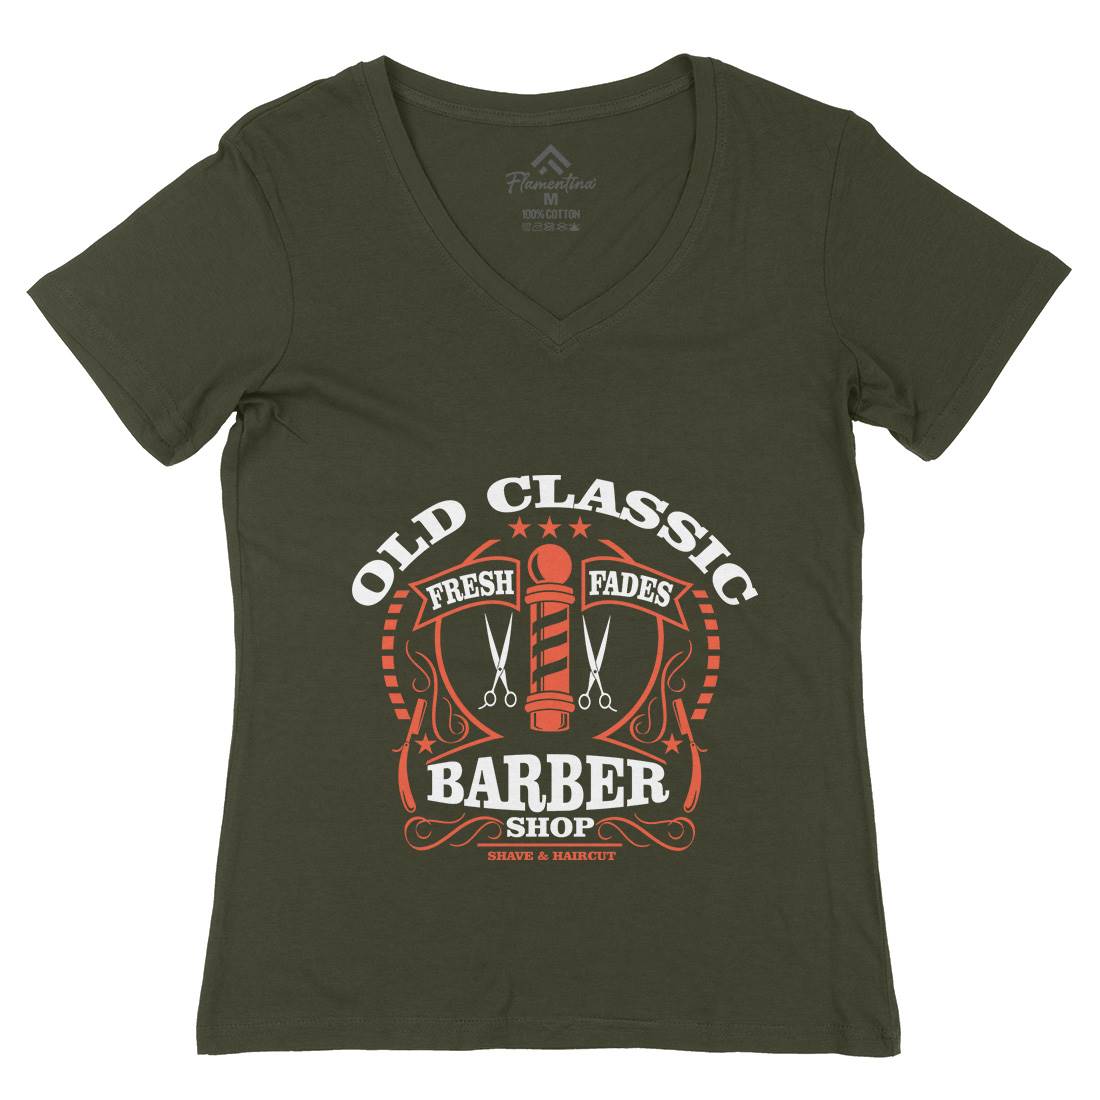 Old Classic Womens Organic V-Neck T-Shirt Barber A099